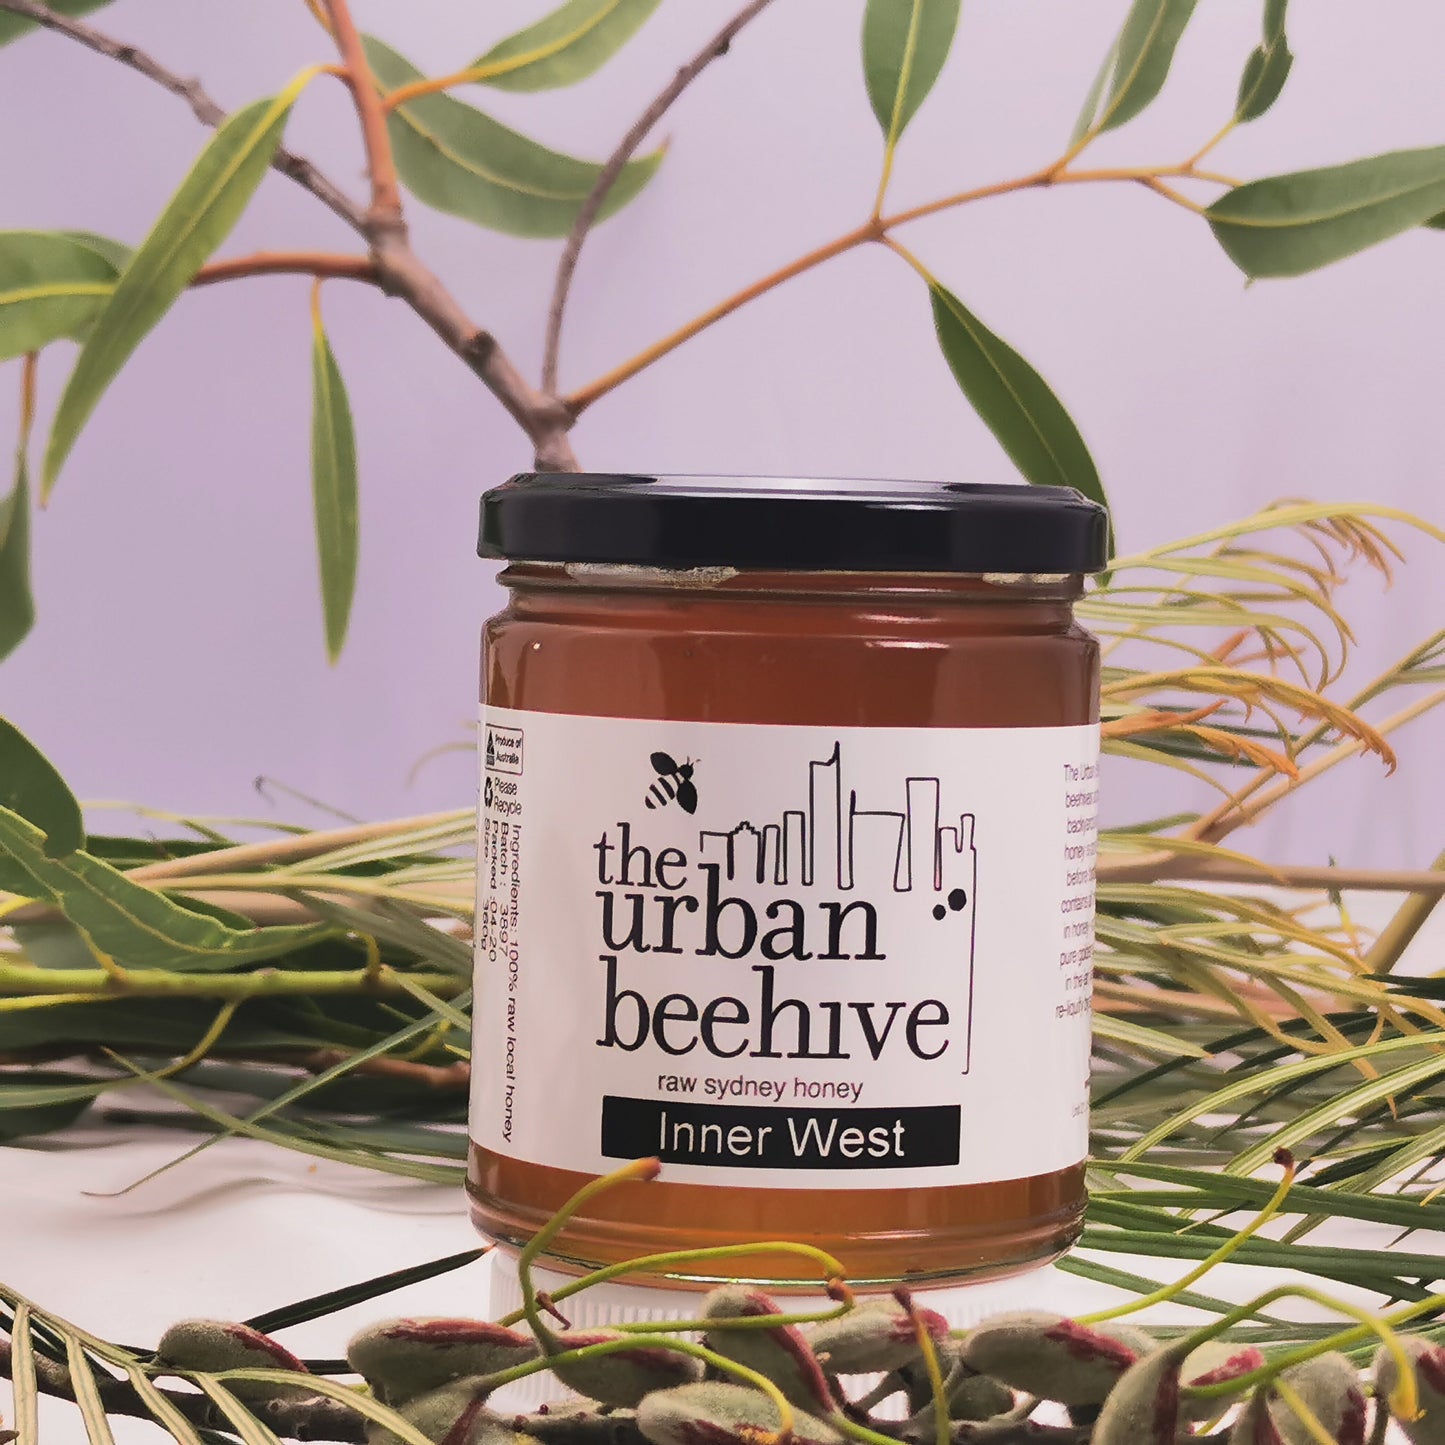 360g Urban honey